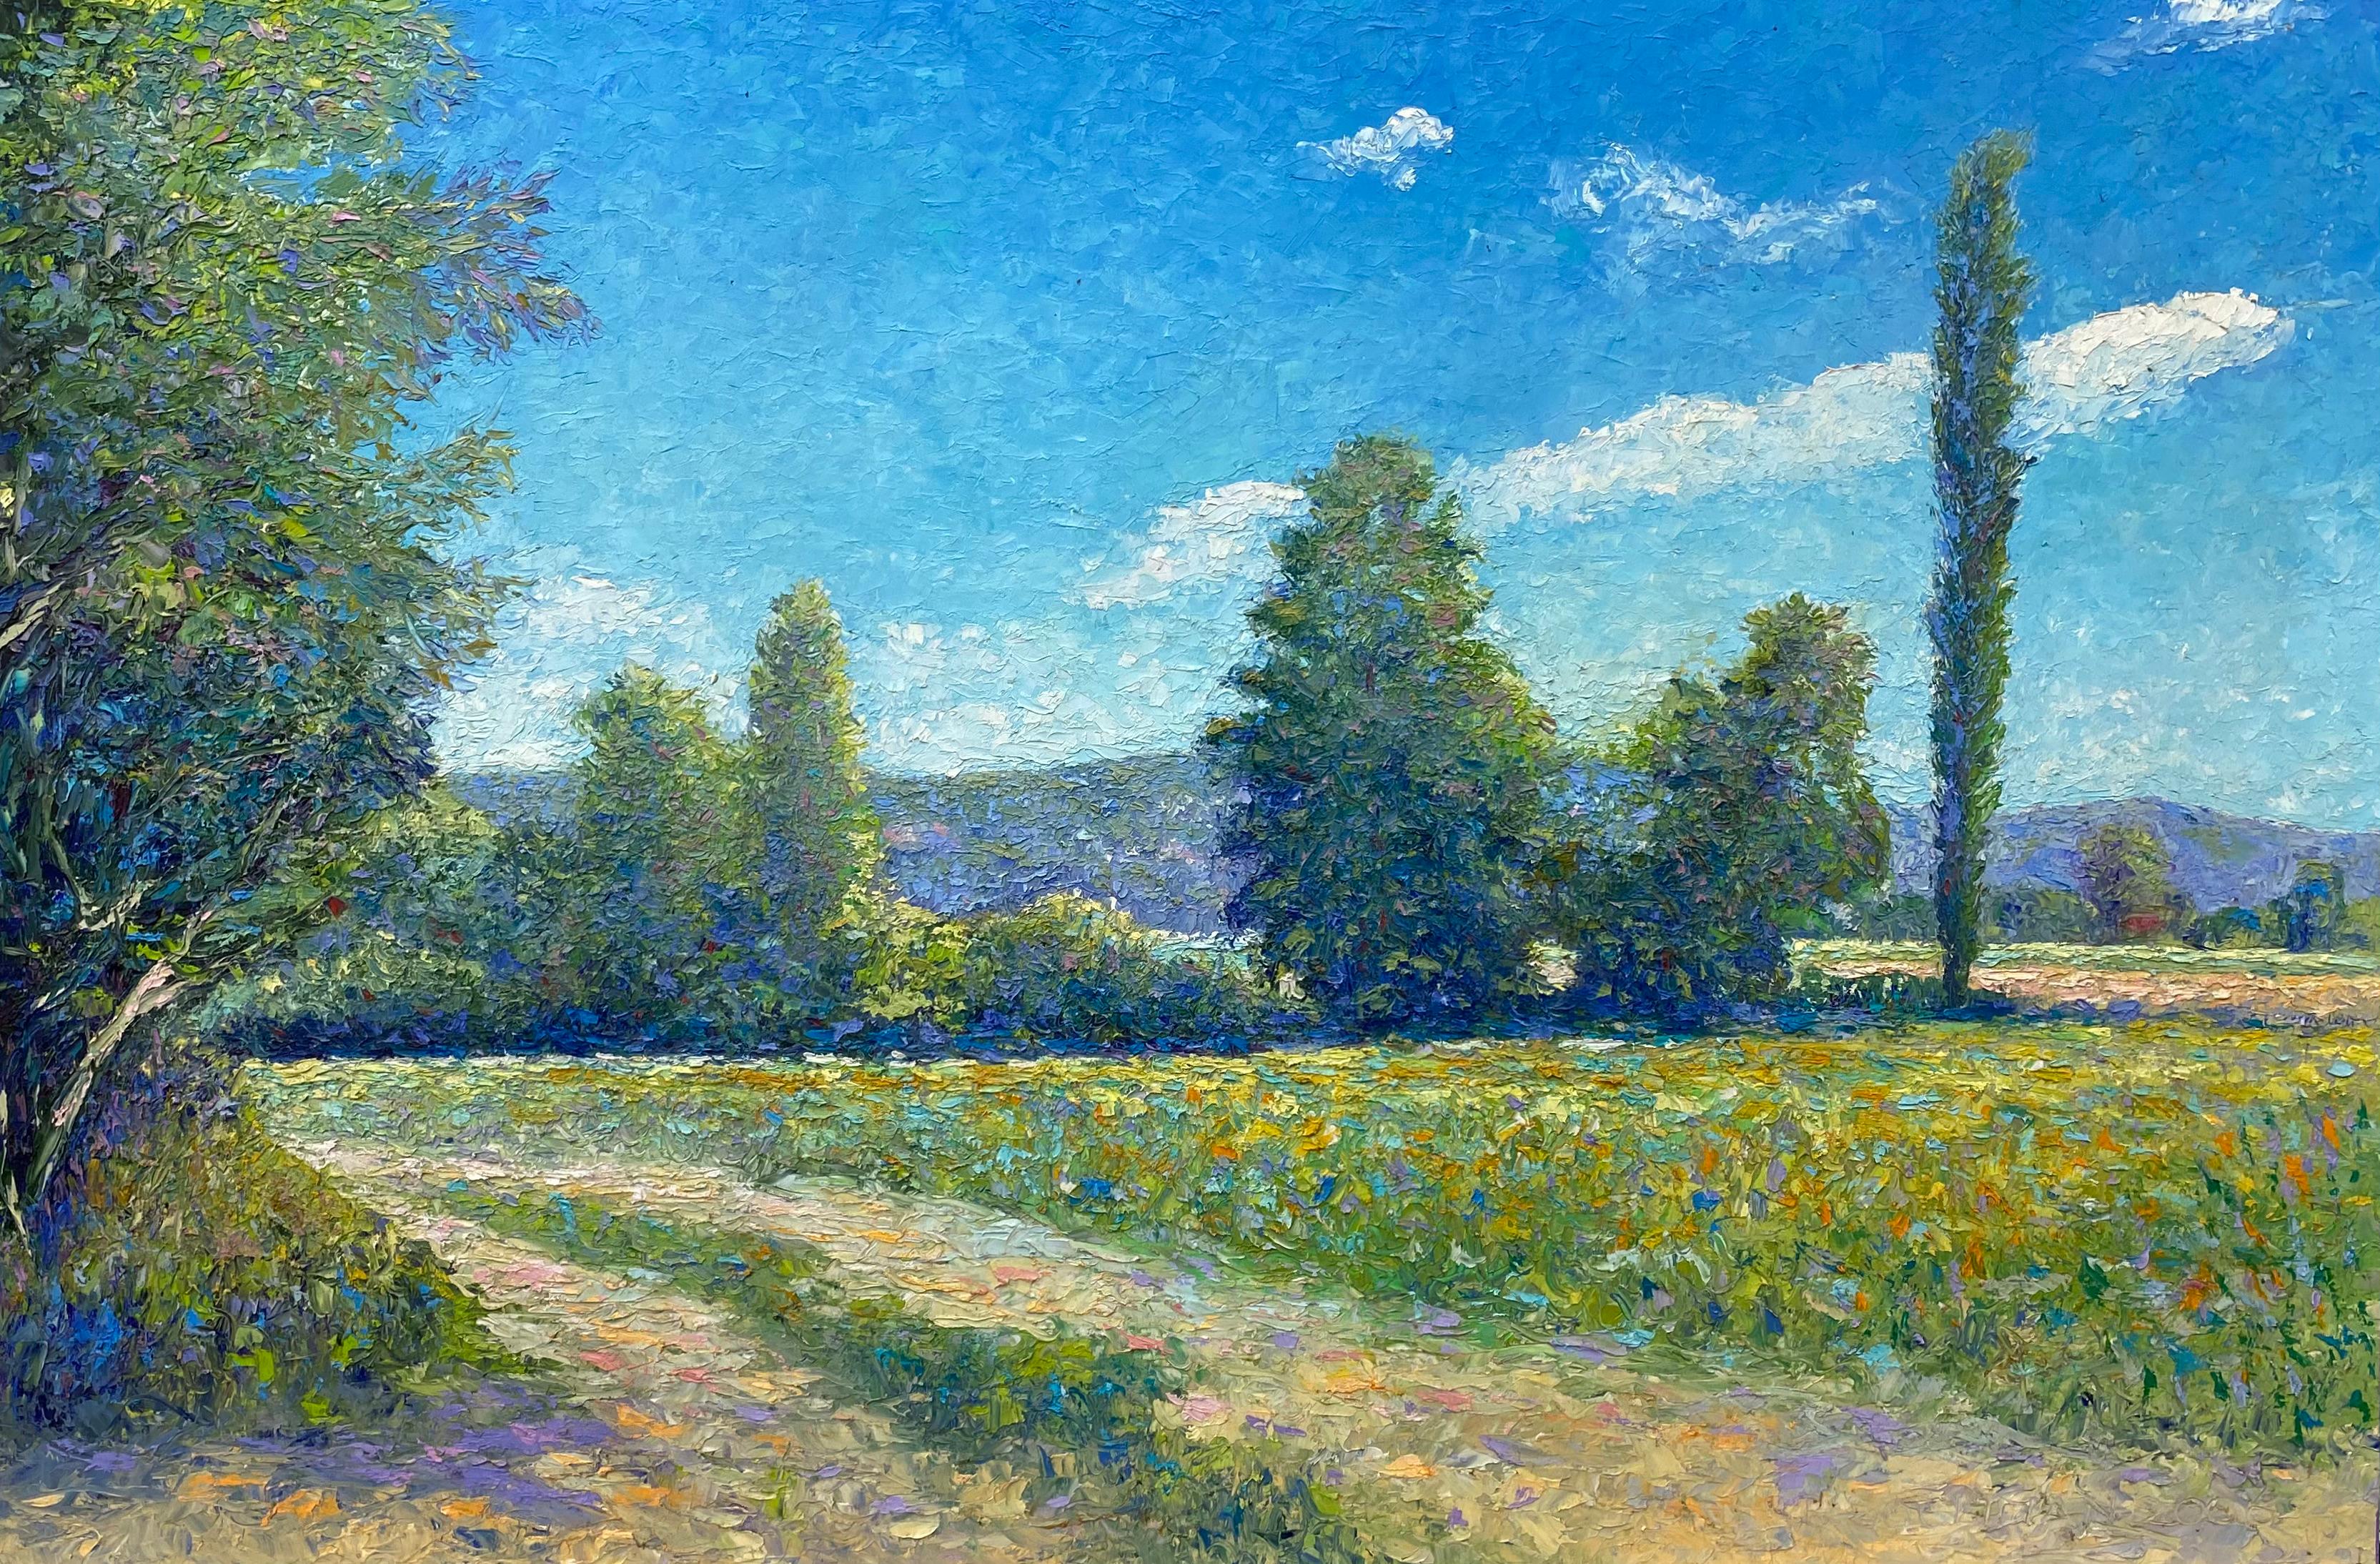 Dordogne (France)- 21st Century Contemporary Impressionistic Landscape Painting